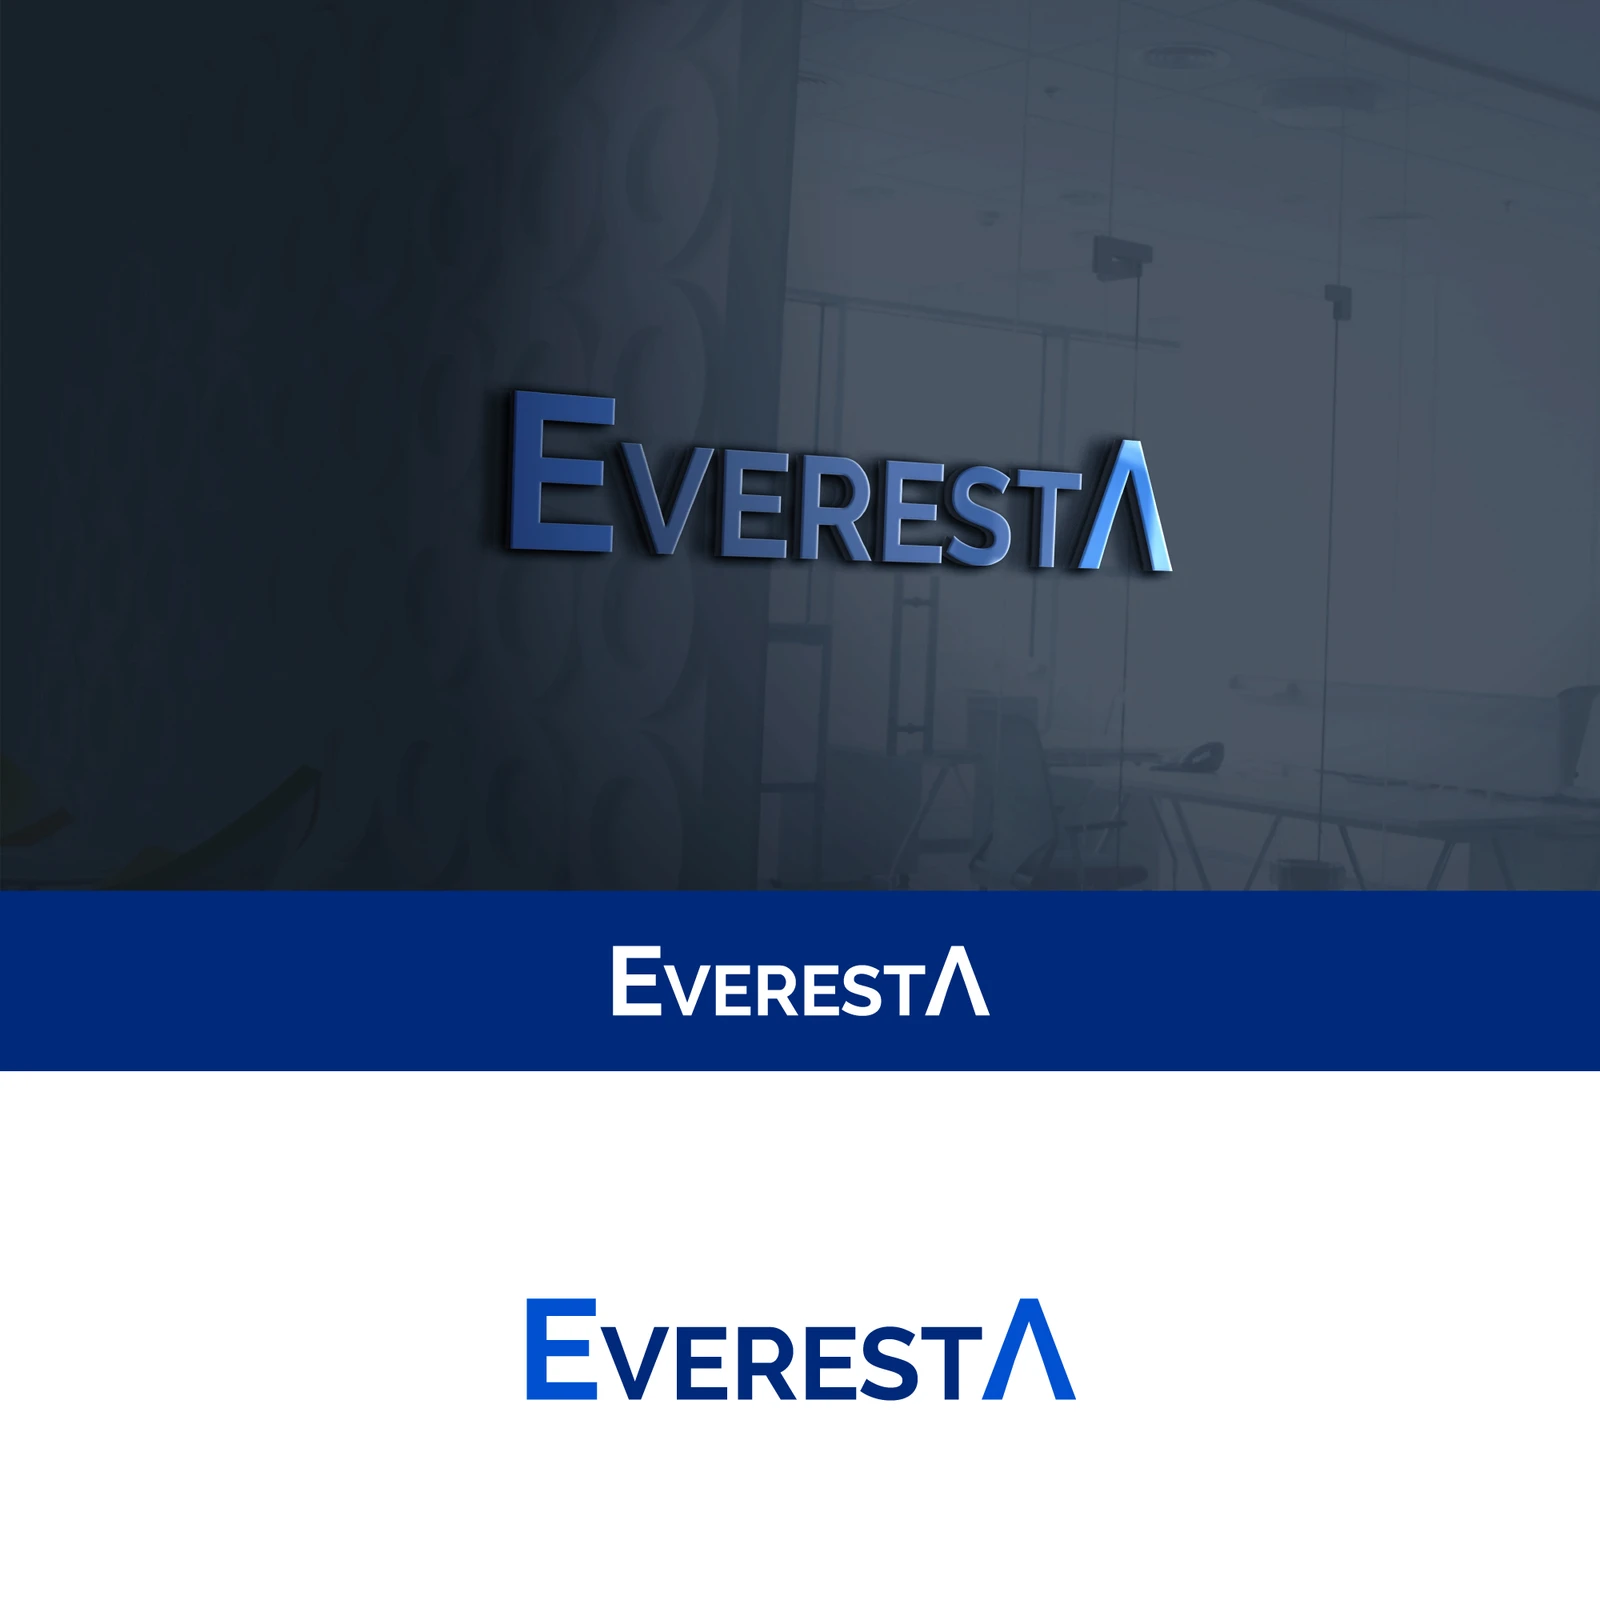 About Everesta®